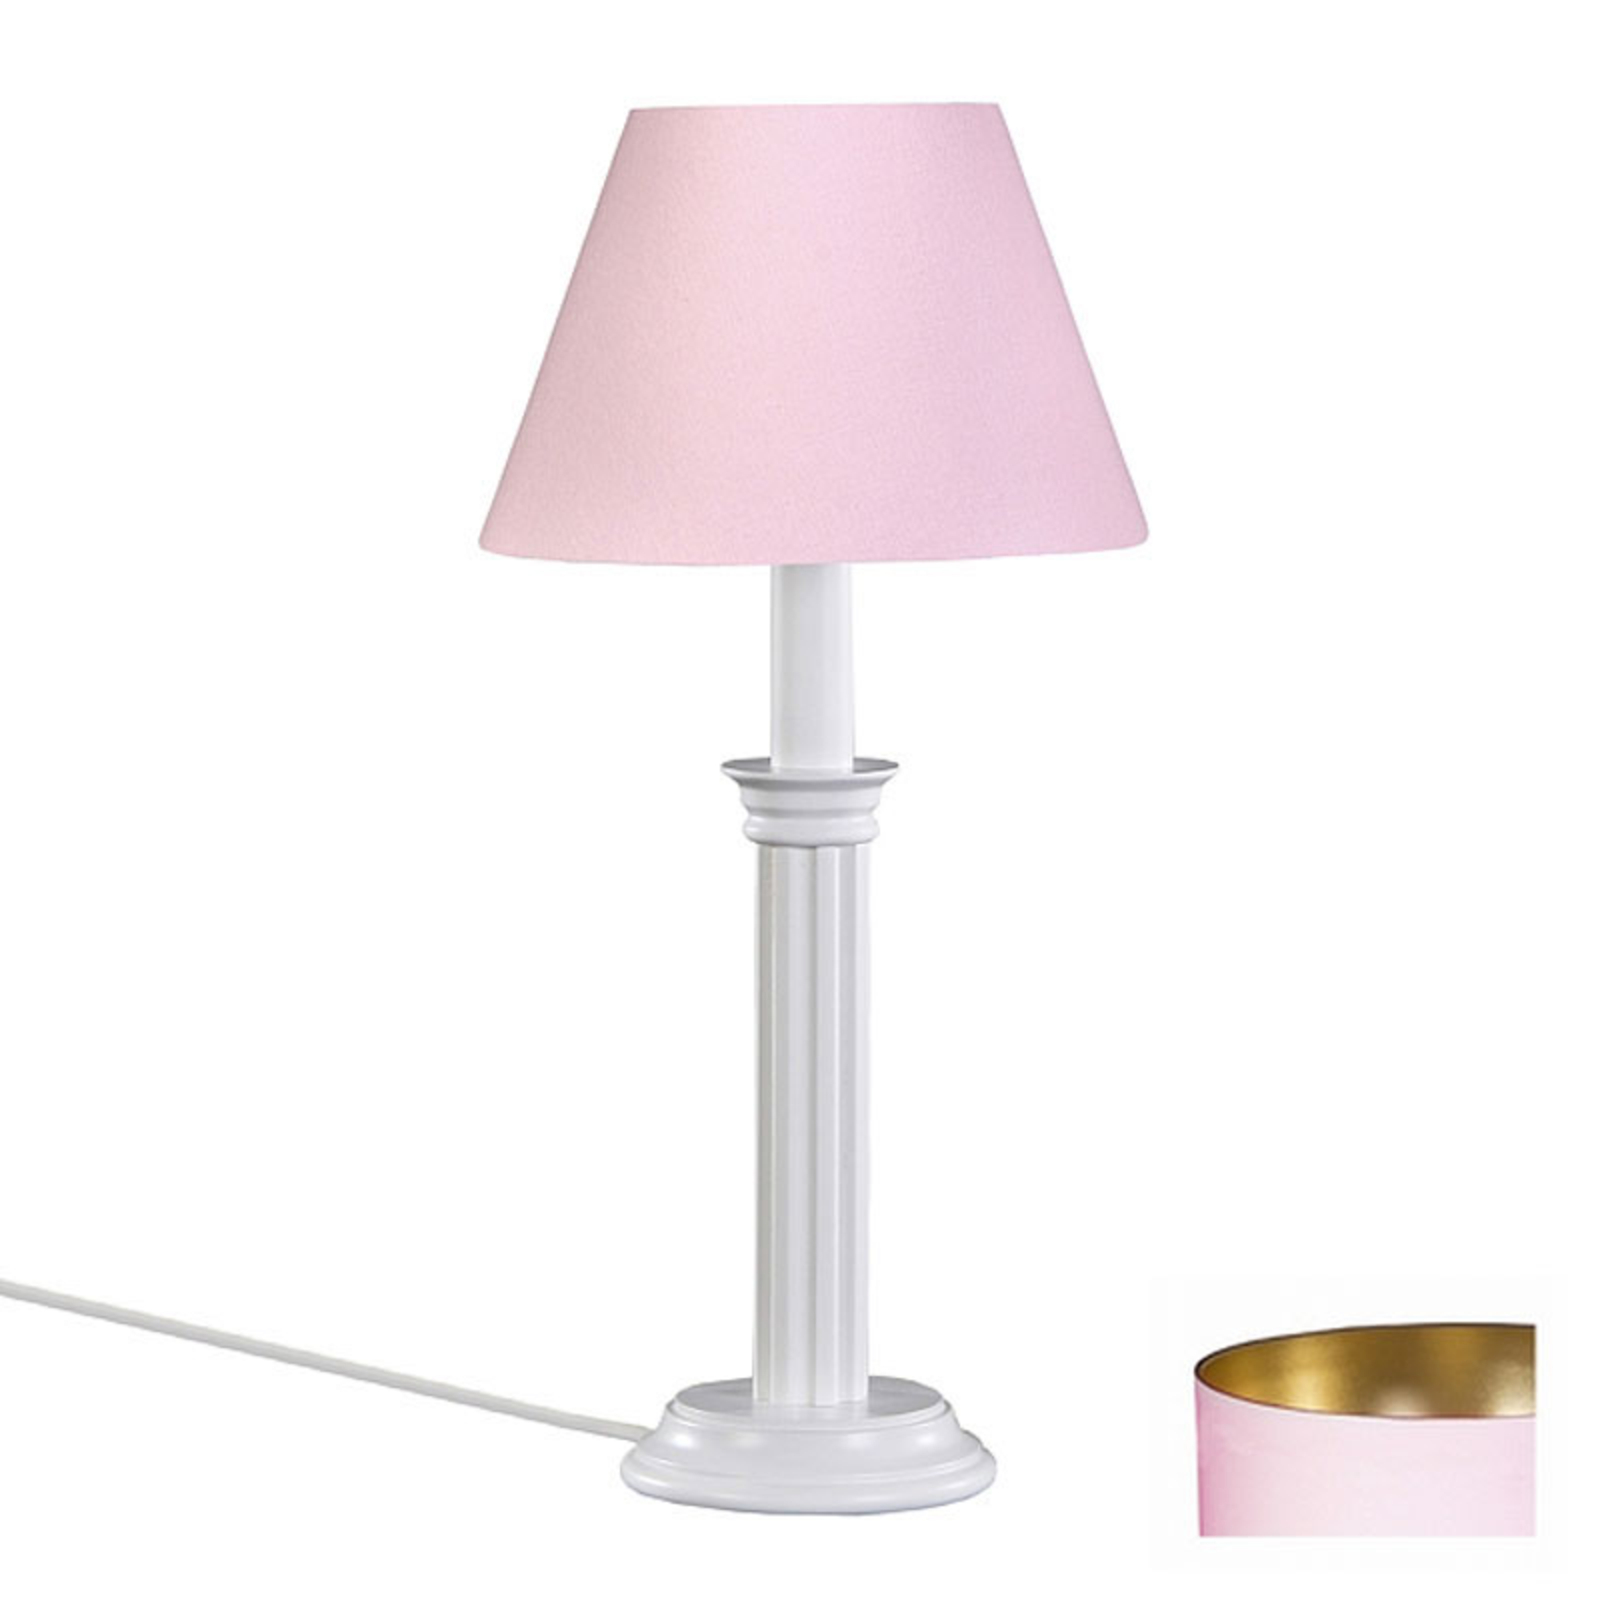 Rose-coloured Klara table lamp